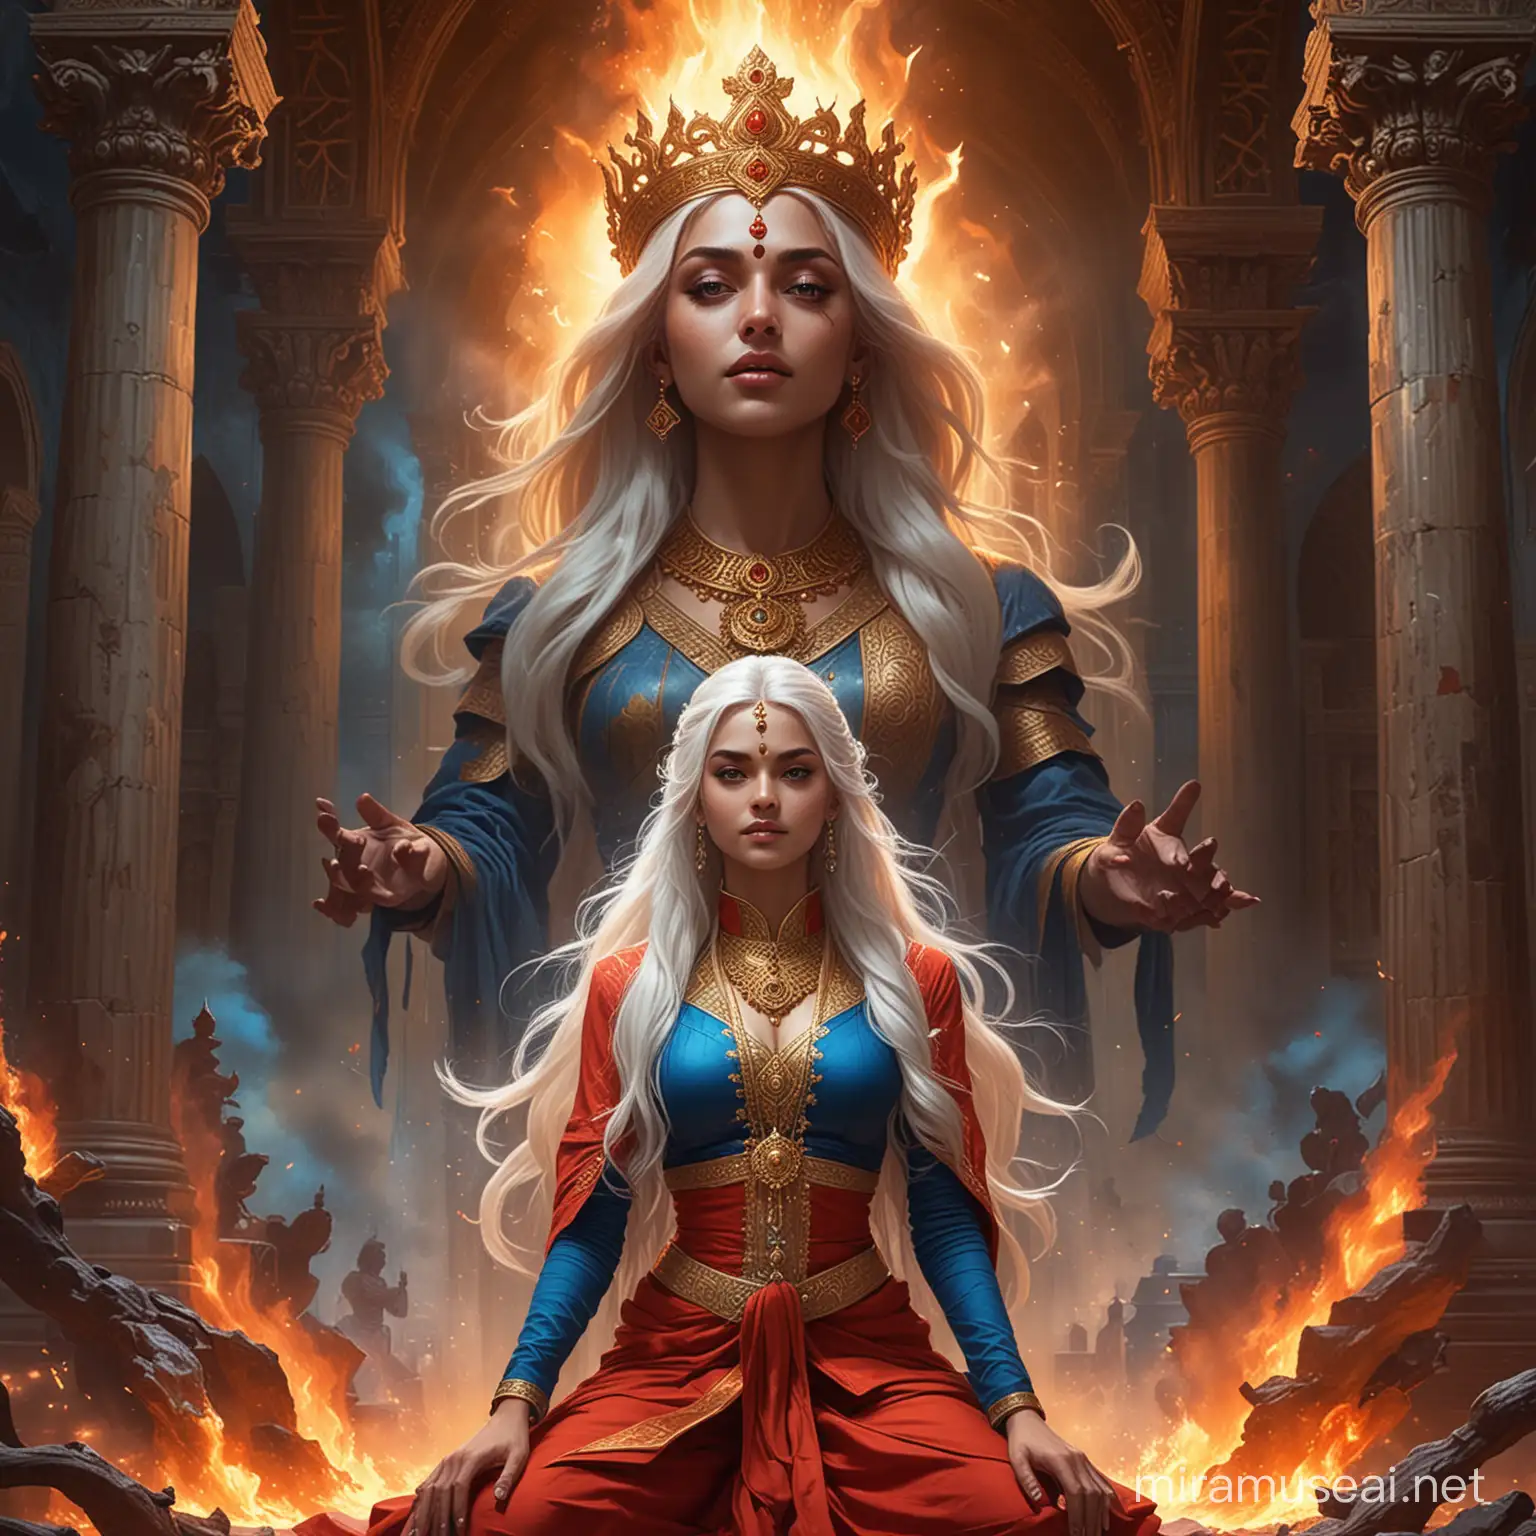 Powerful Hindu Empress Summoning Cosmic Forces in Mystical Battle